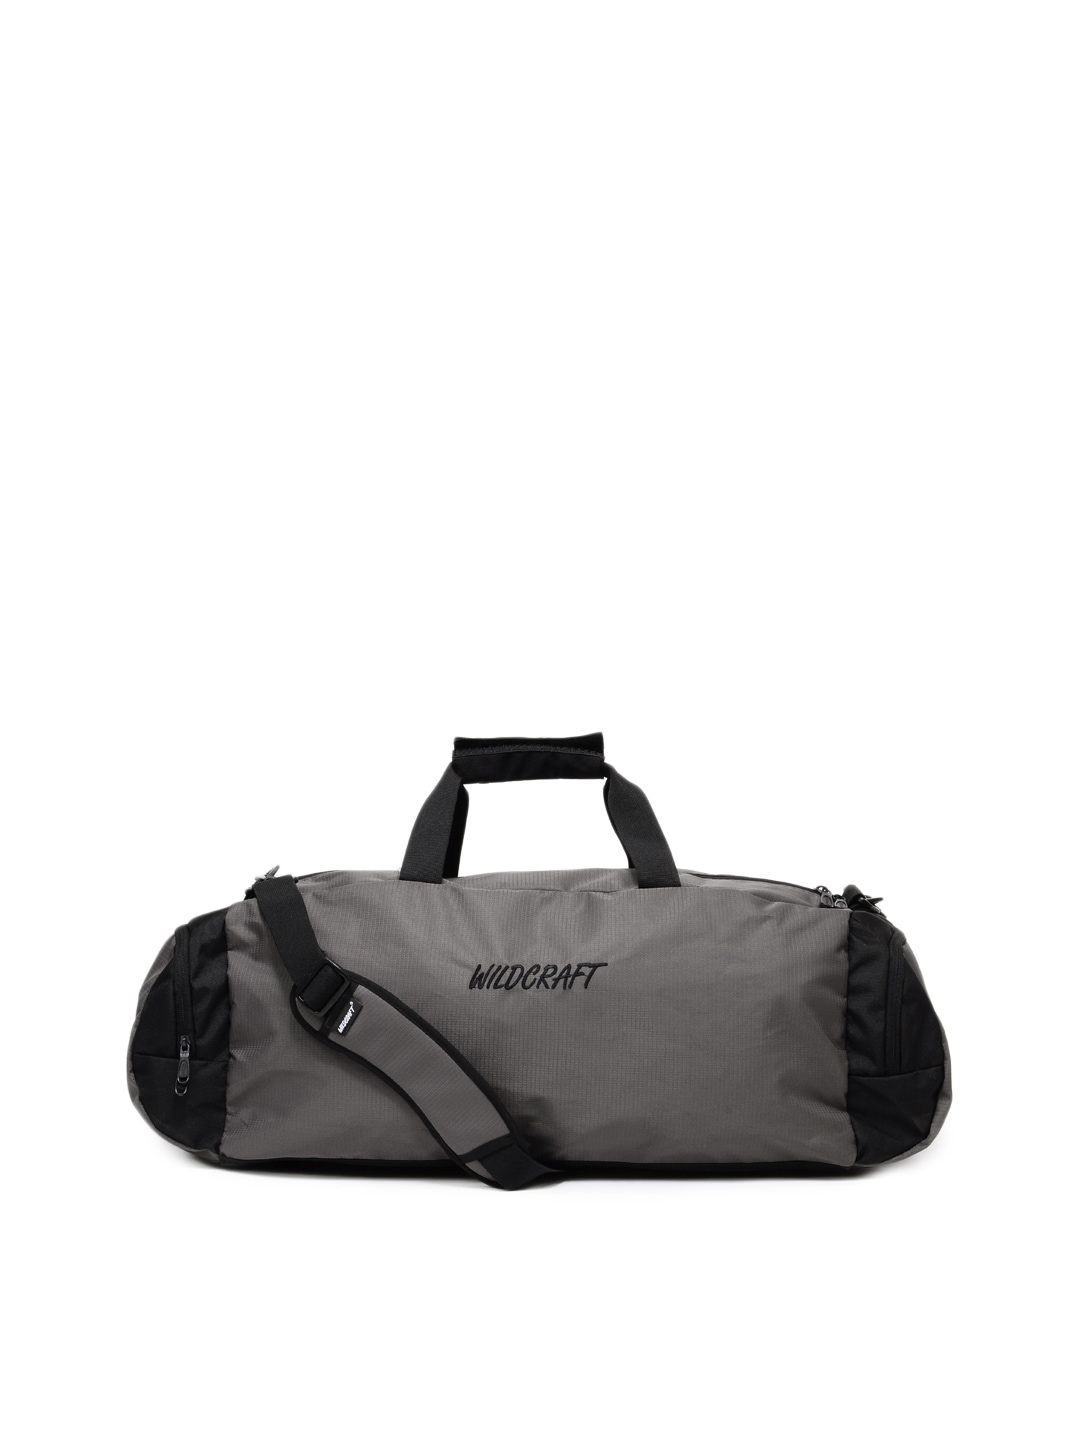 Wildcraft Unisex Grey Duffle Bag